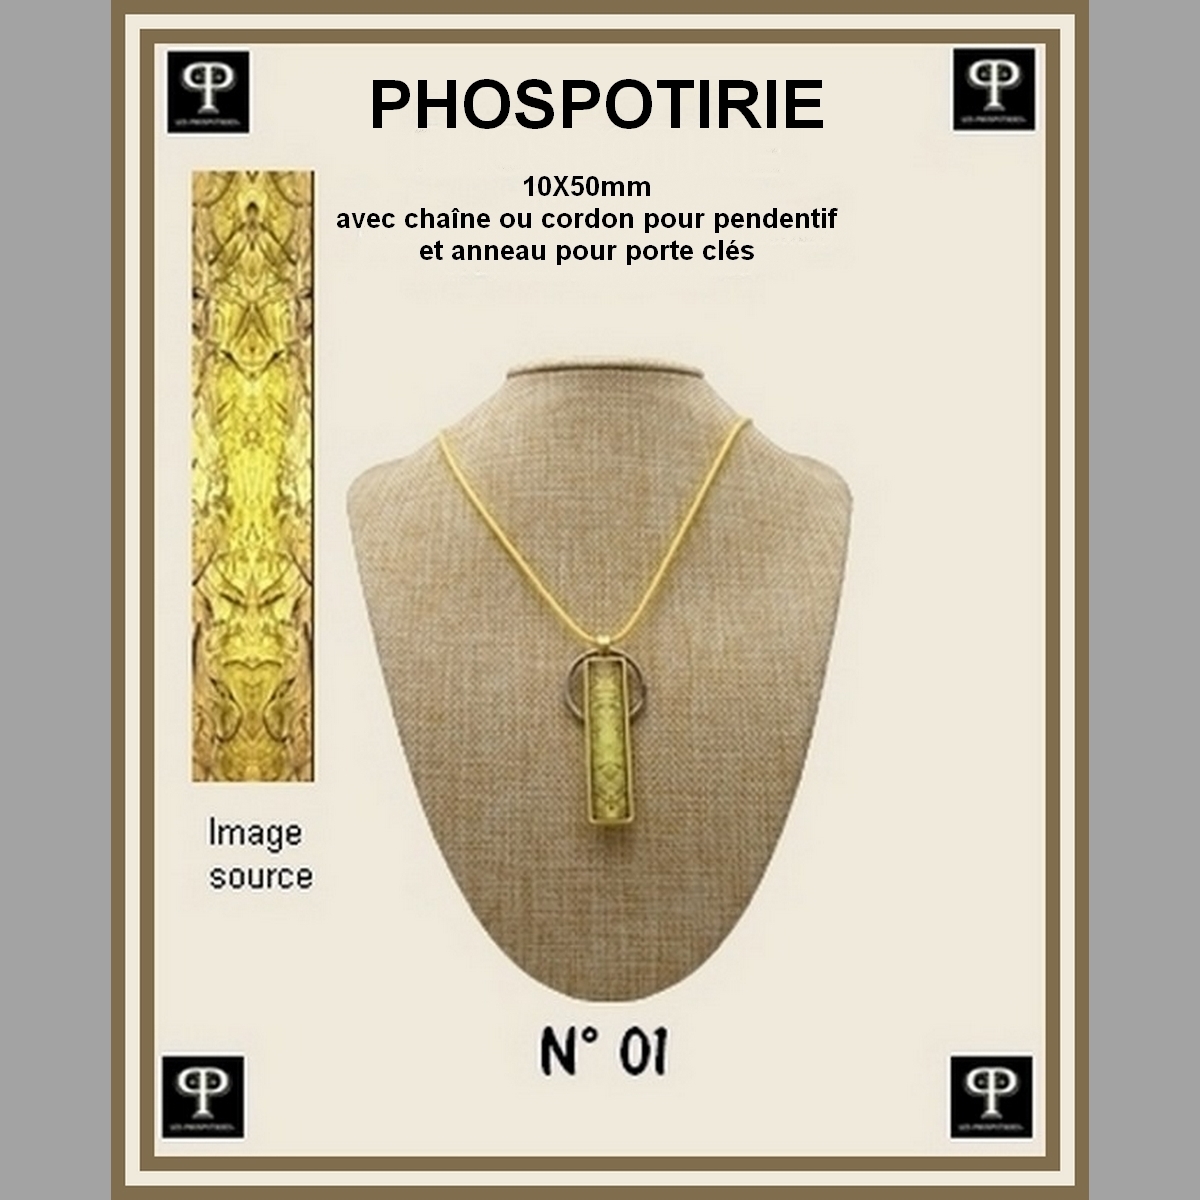 Phospotirie version TOTEM 10X50 mm N°01 pour pendentifs ou porte-clés